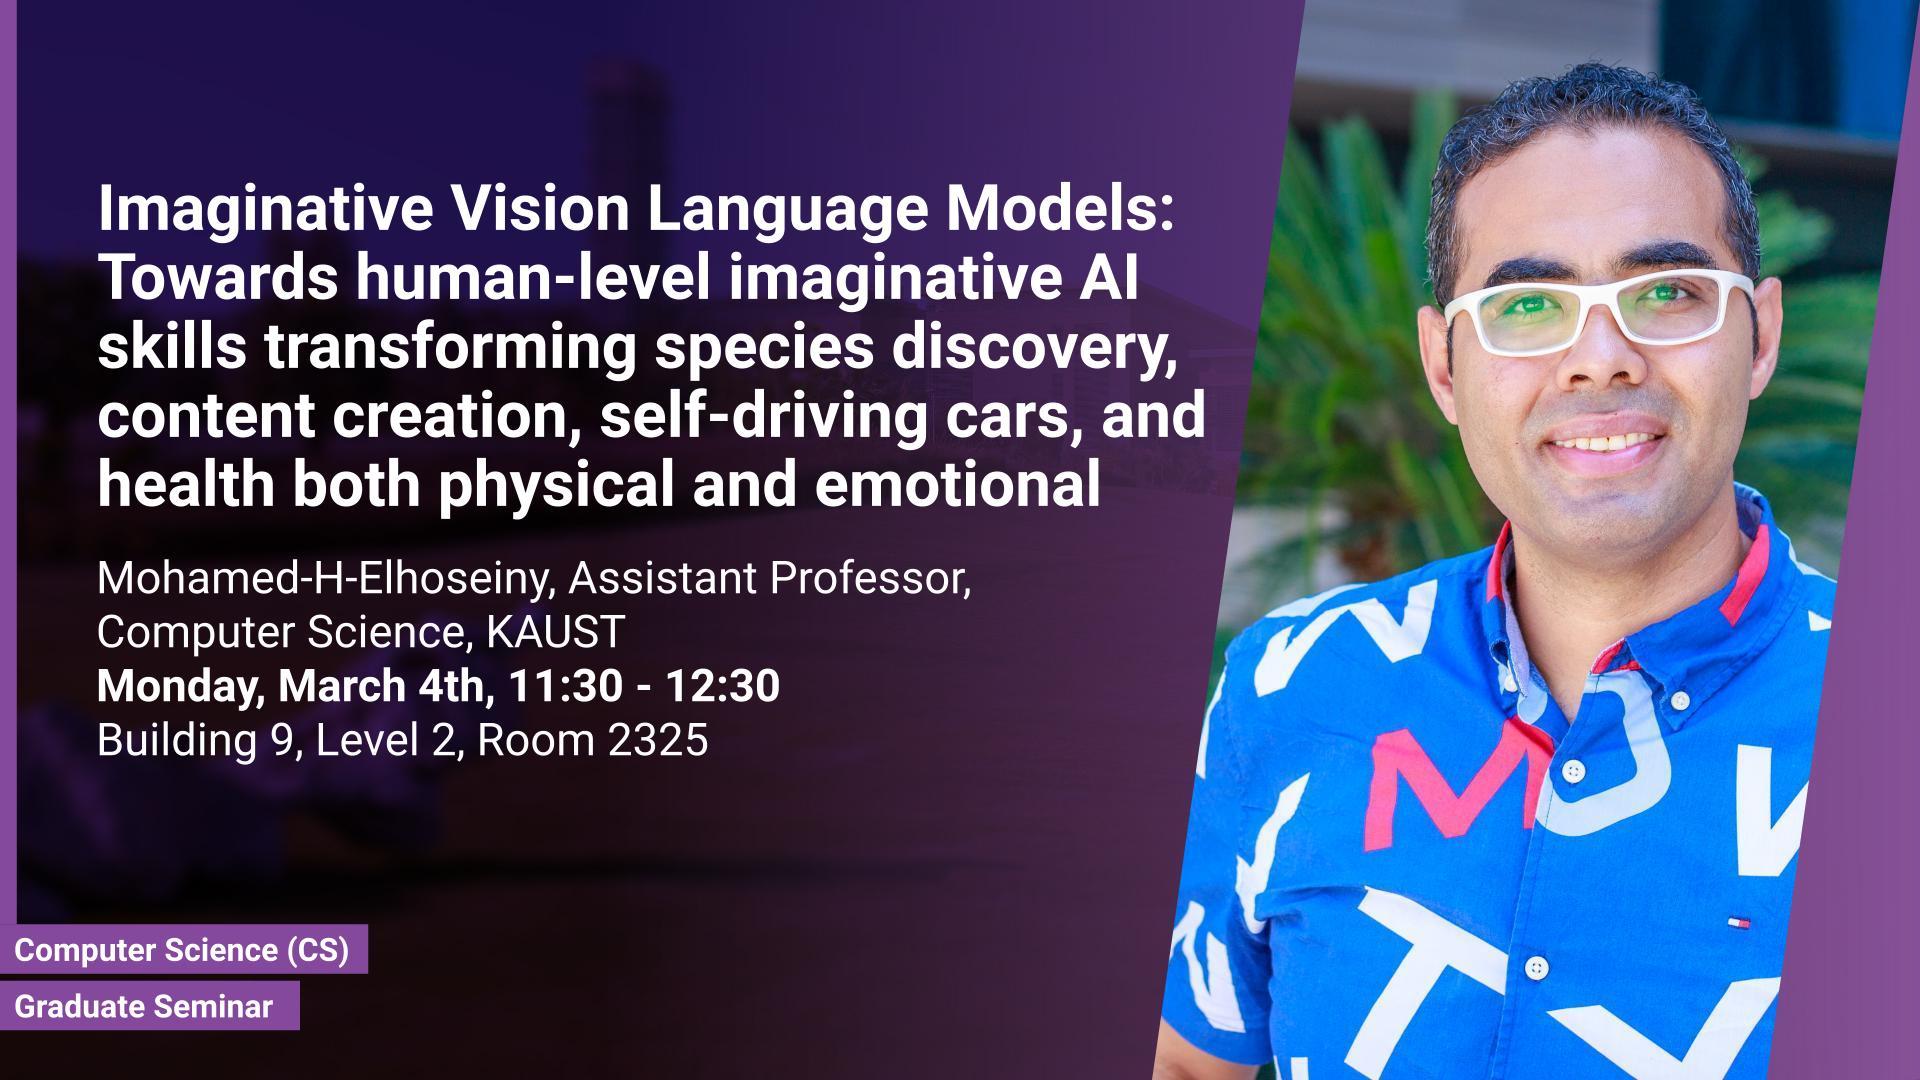 KAUST-CEMSE-CS-Graduate-Seminar-Mohamed-Elhoseiny-Imaginative Vision Language Models (1).jpg